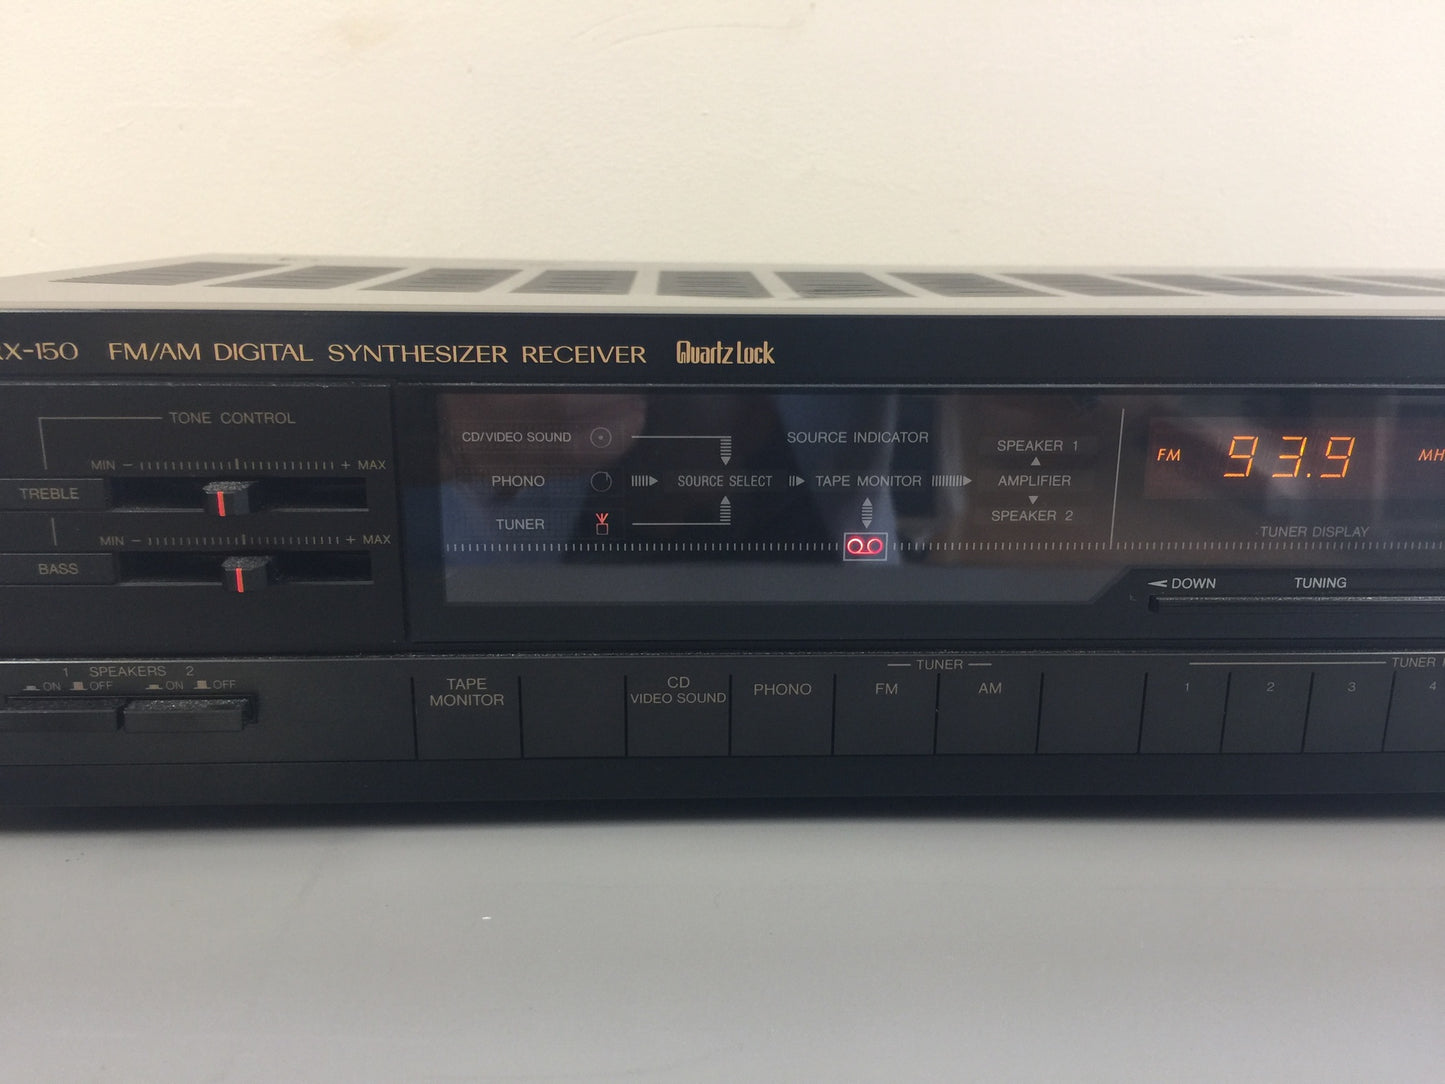 JVC RX-150 Stereo Receiver * 25W RMS * 1986